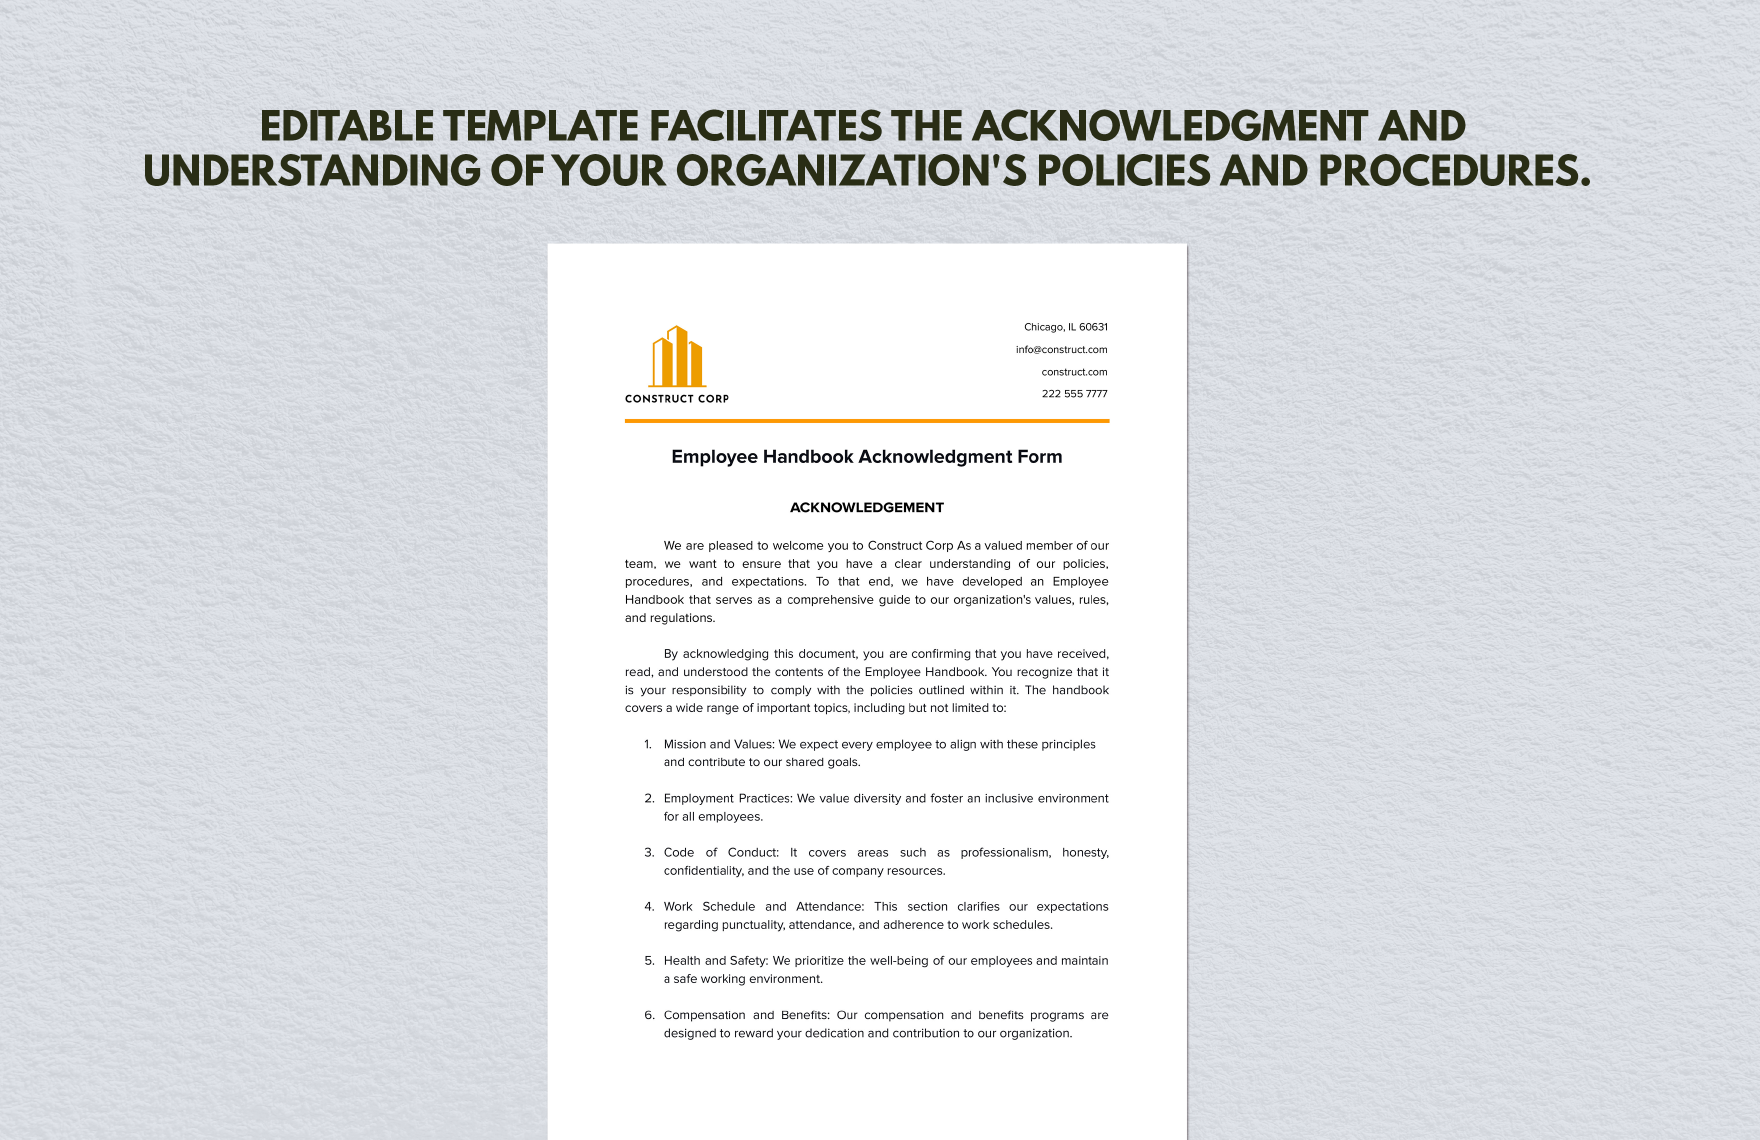 Employee Handbook Acknowledgment Form